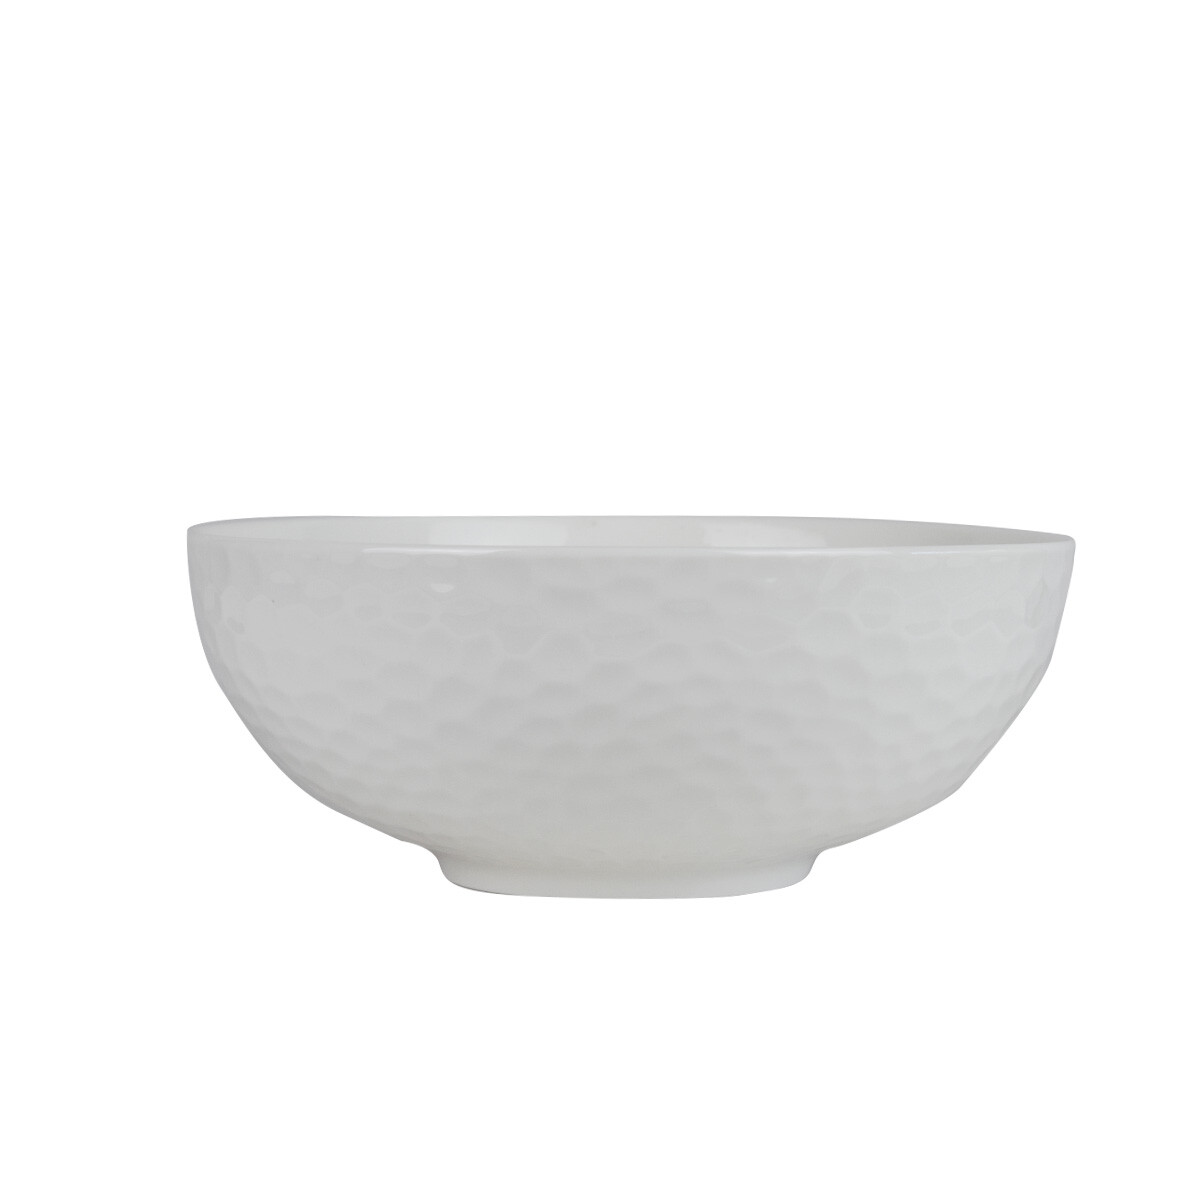 Bowl de cerámica labrada diseño de panal de abeja 